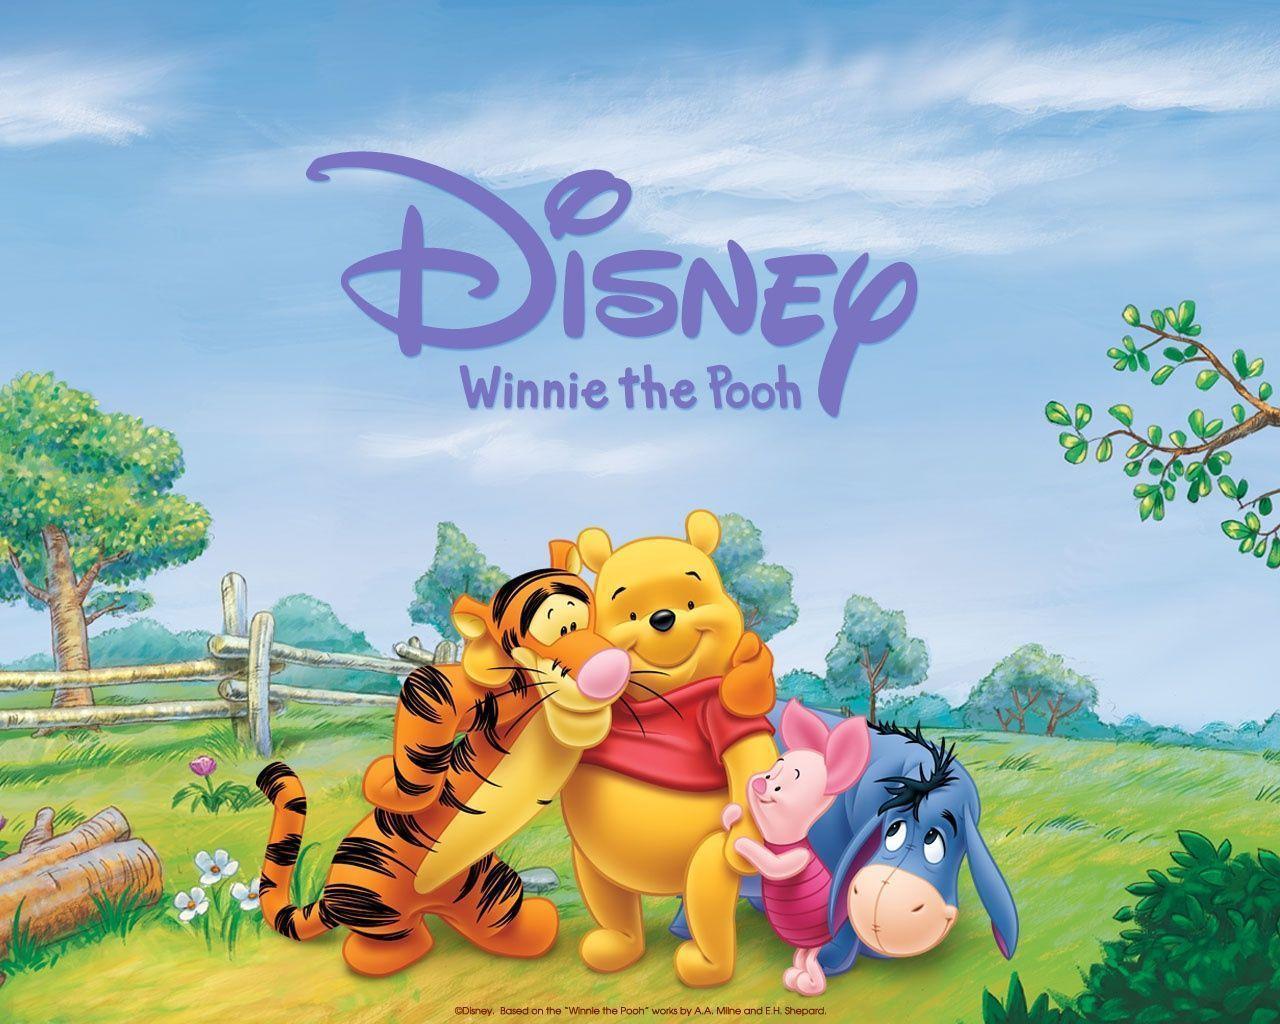 Disney Winnie The Pooh Wallpaper 1280x1024PX Wallpaper Pooh